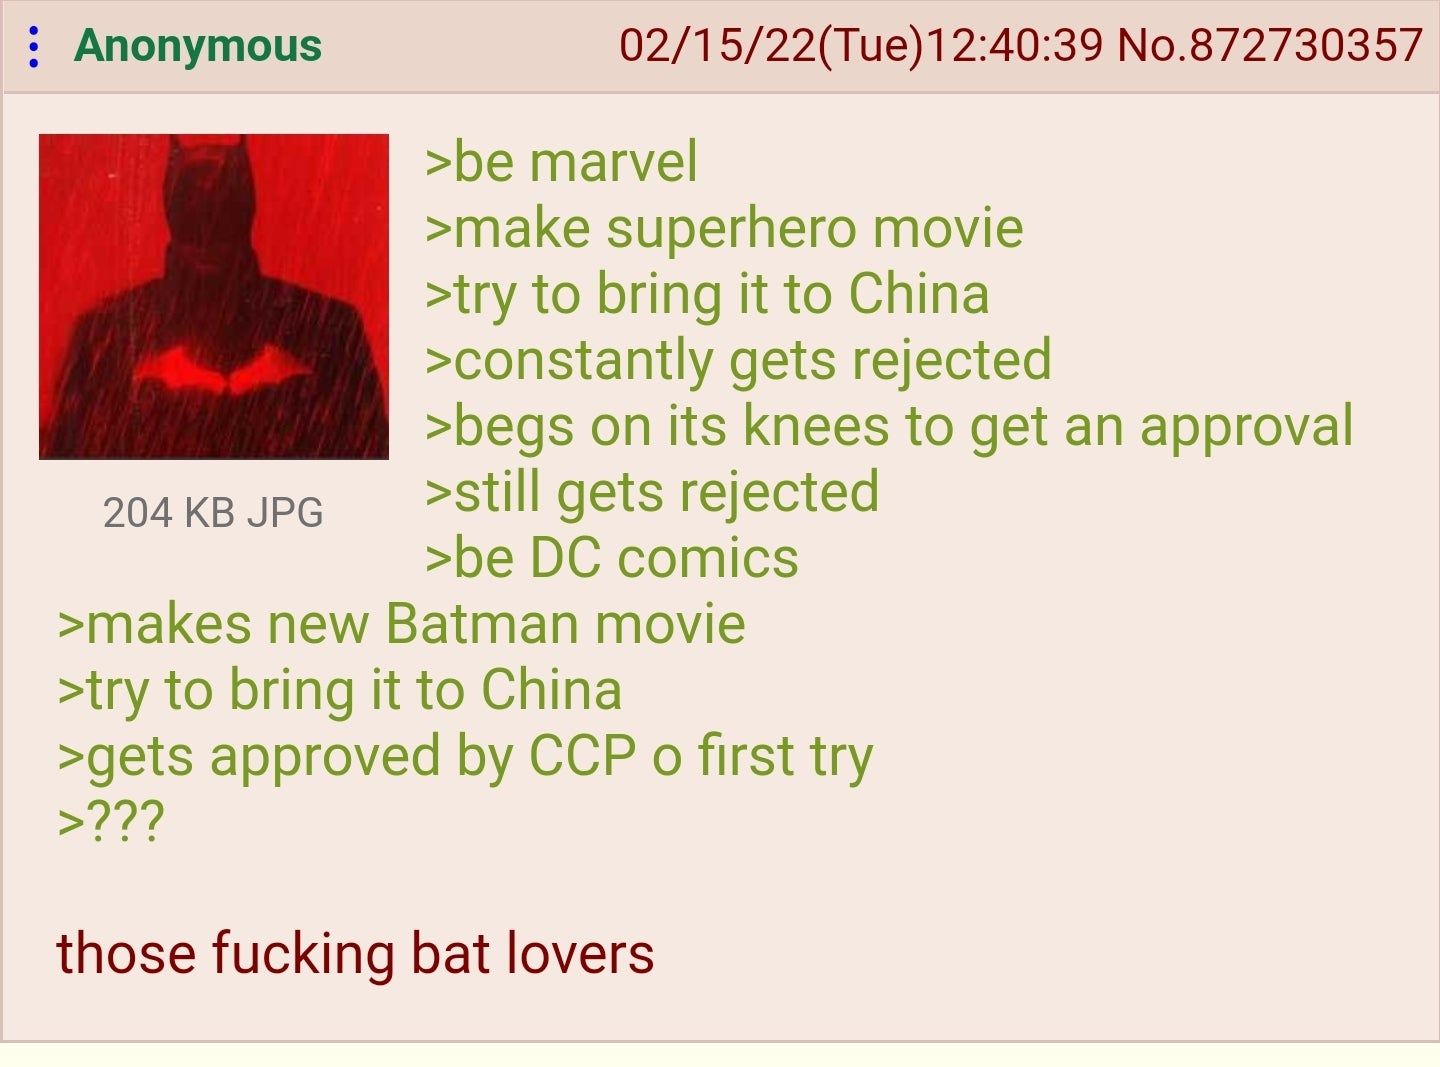 Bat lovers